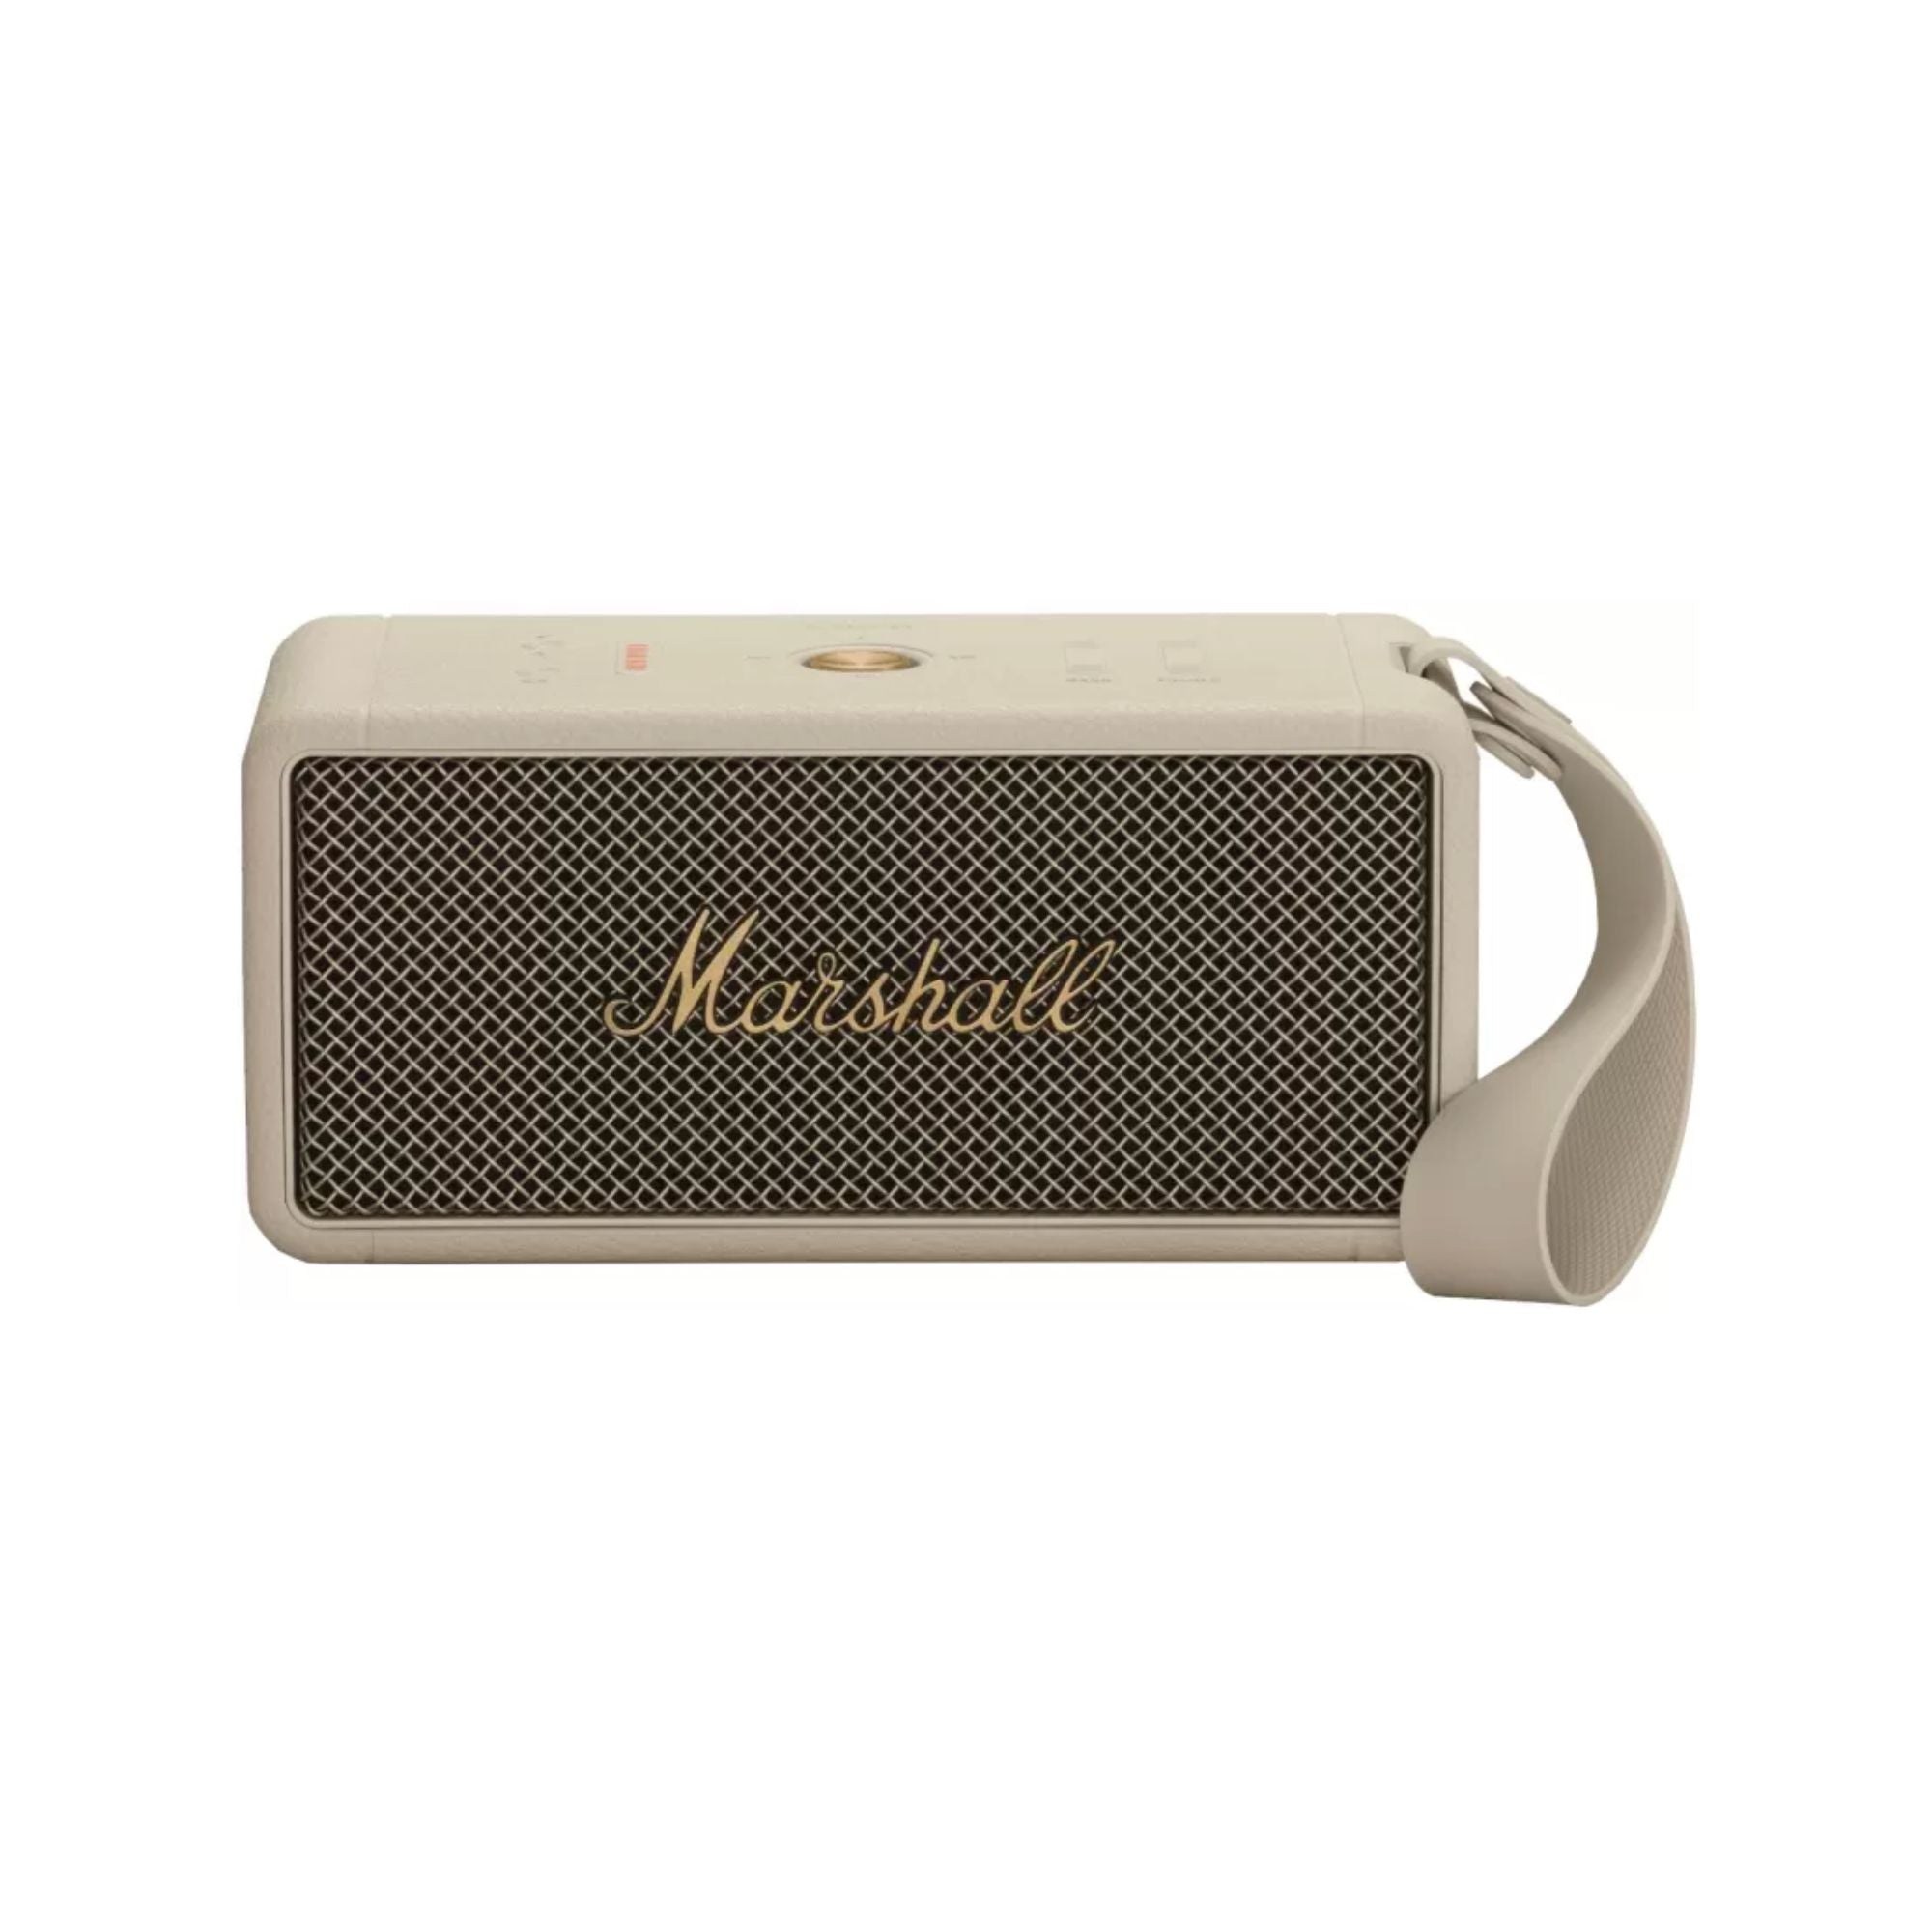 Marshall Middleton - Waterproof Portable Bluetooth Speaker, Marshall, Bluetooth Speaker - AVStore.in